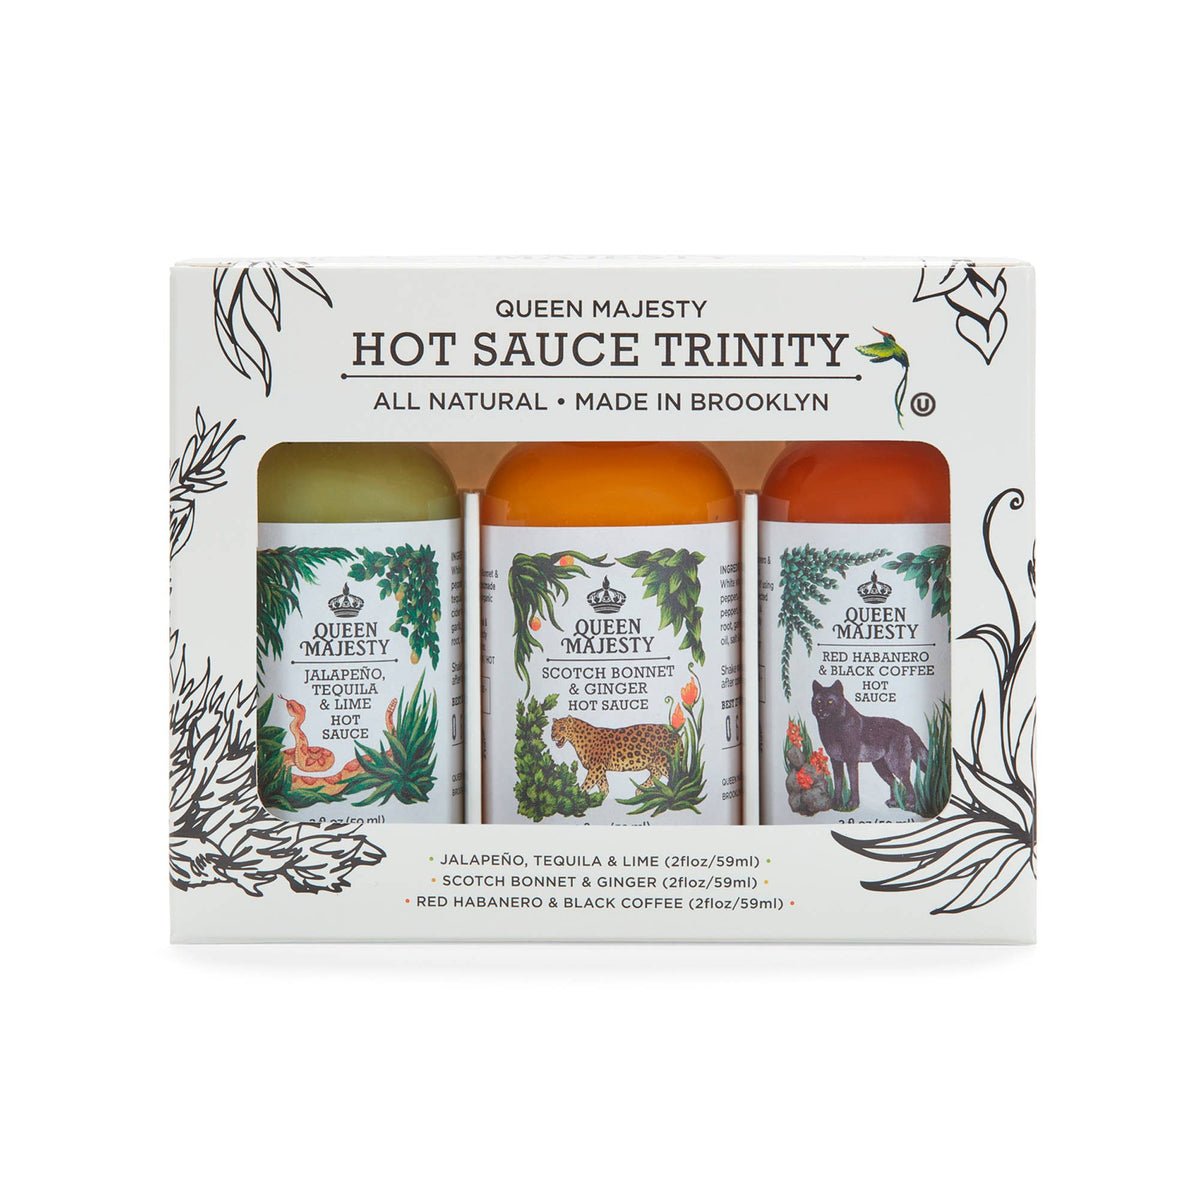 2 oz. Trinity Hot Sauce Sampler